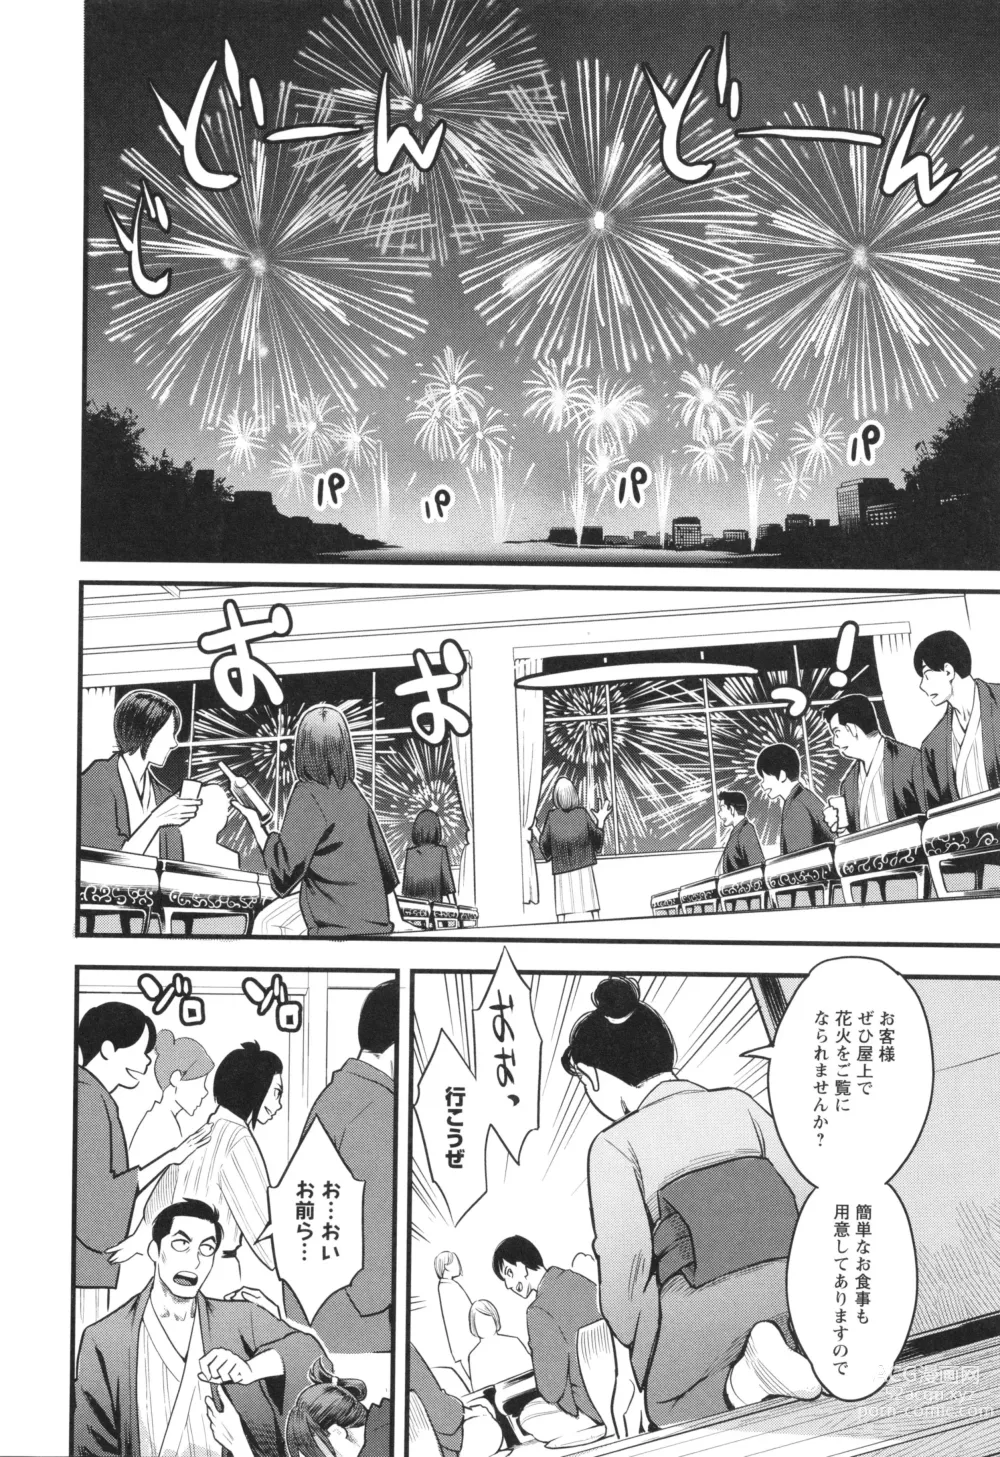 Page 175 of manga Hoshigaoka Star Volley